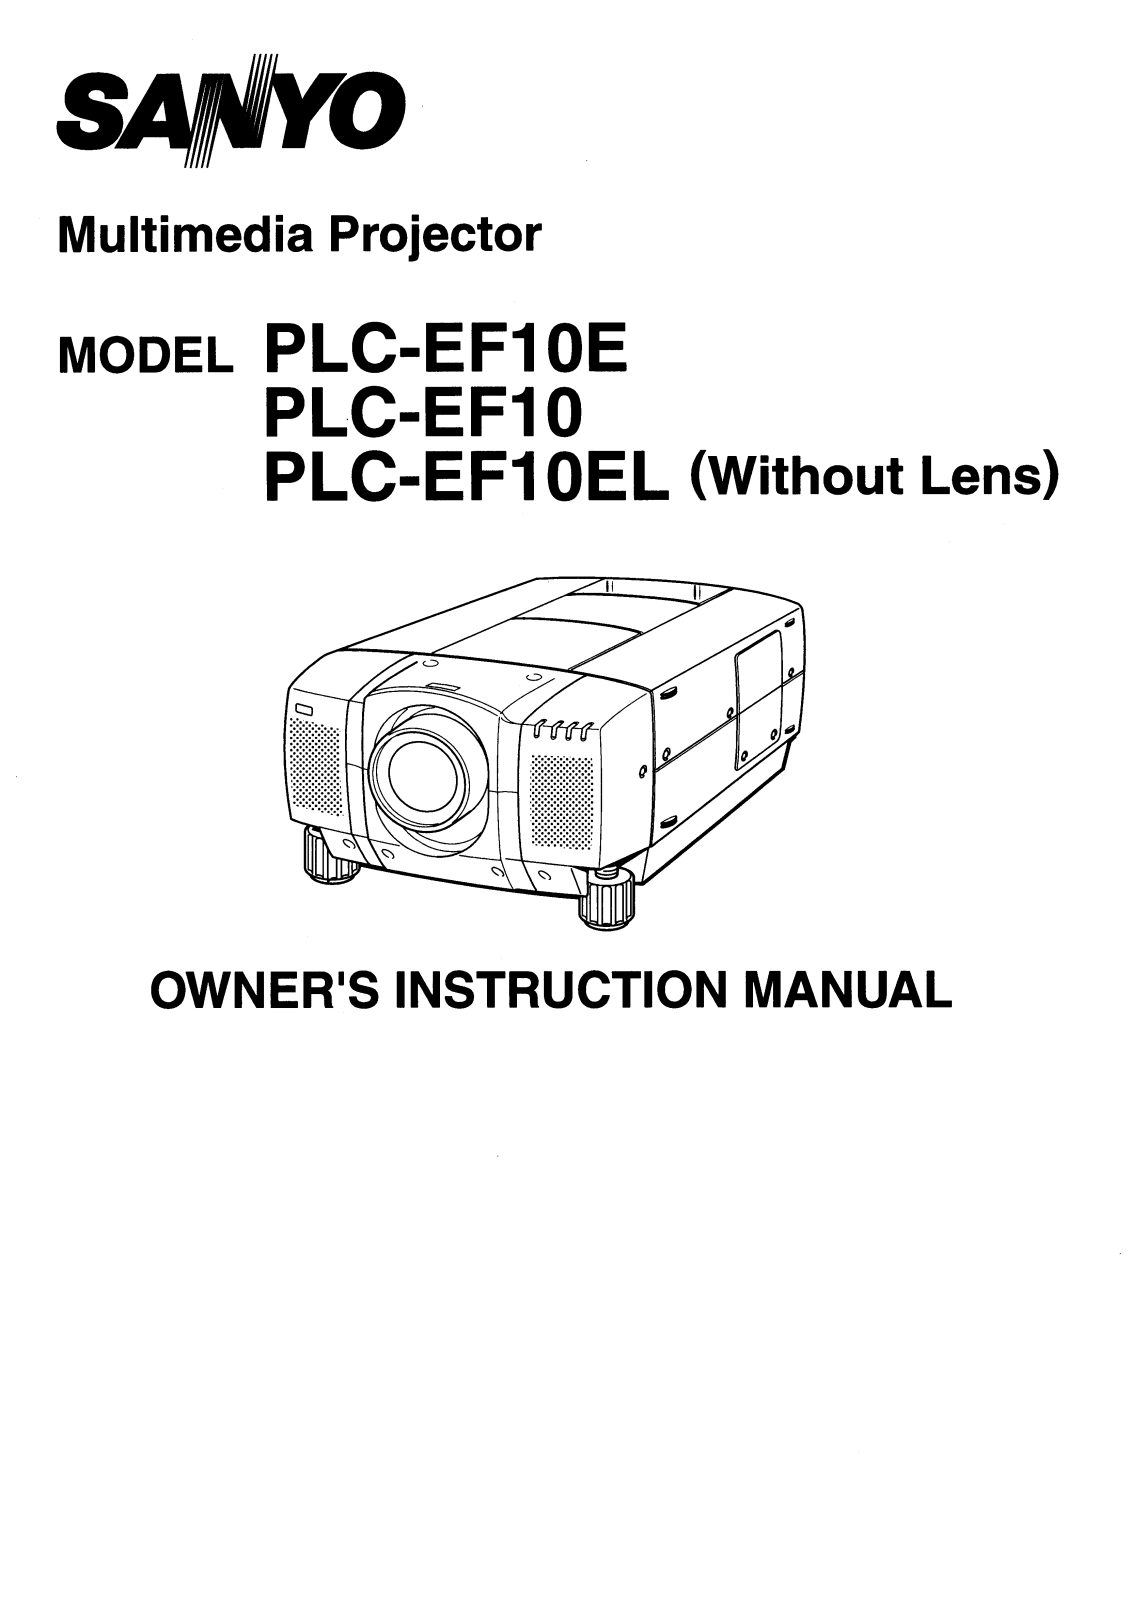 Sanyo PLC-EF10, PLC-EF10E, PLC-EF10EL Instruction Manual